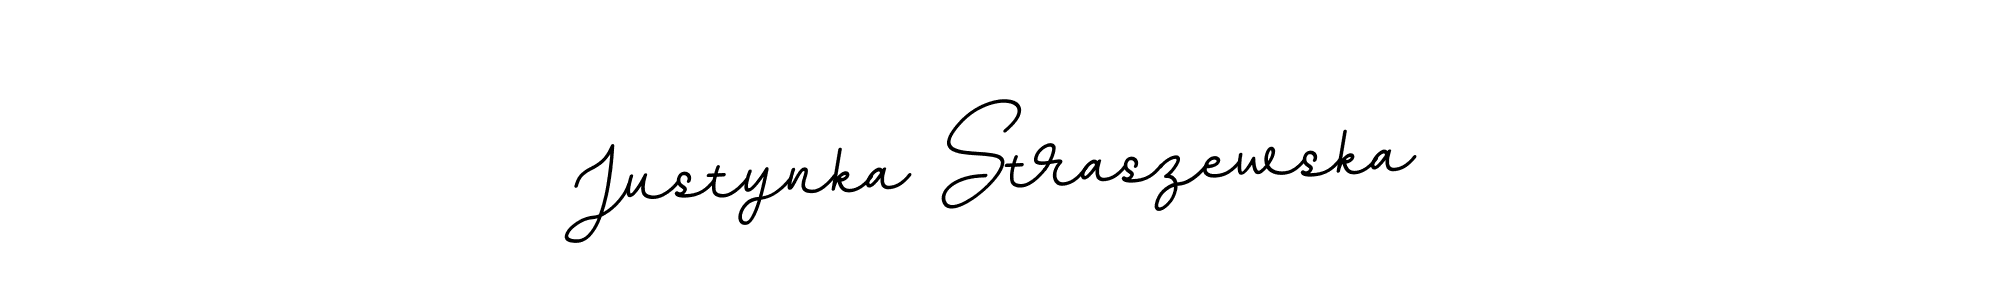 How to Draw Justynka Straszewska signature style? BallpointsItalic-DORy9 is a latest design signature styles for name Justynka Straszewska. Justynka Straszewska signature style 11 images and pictures png